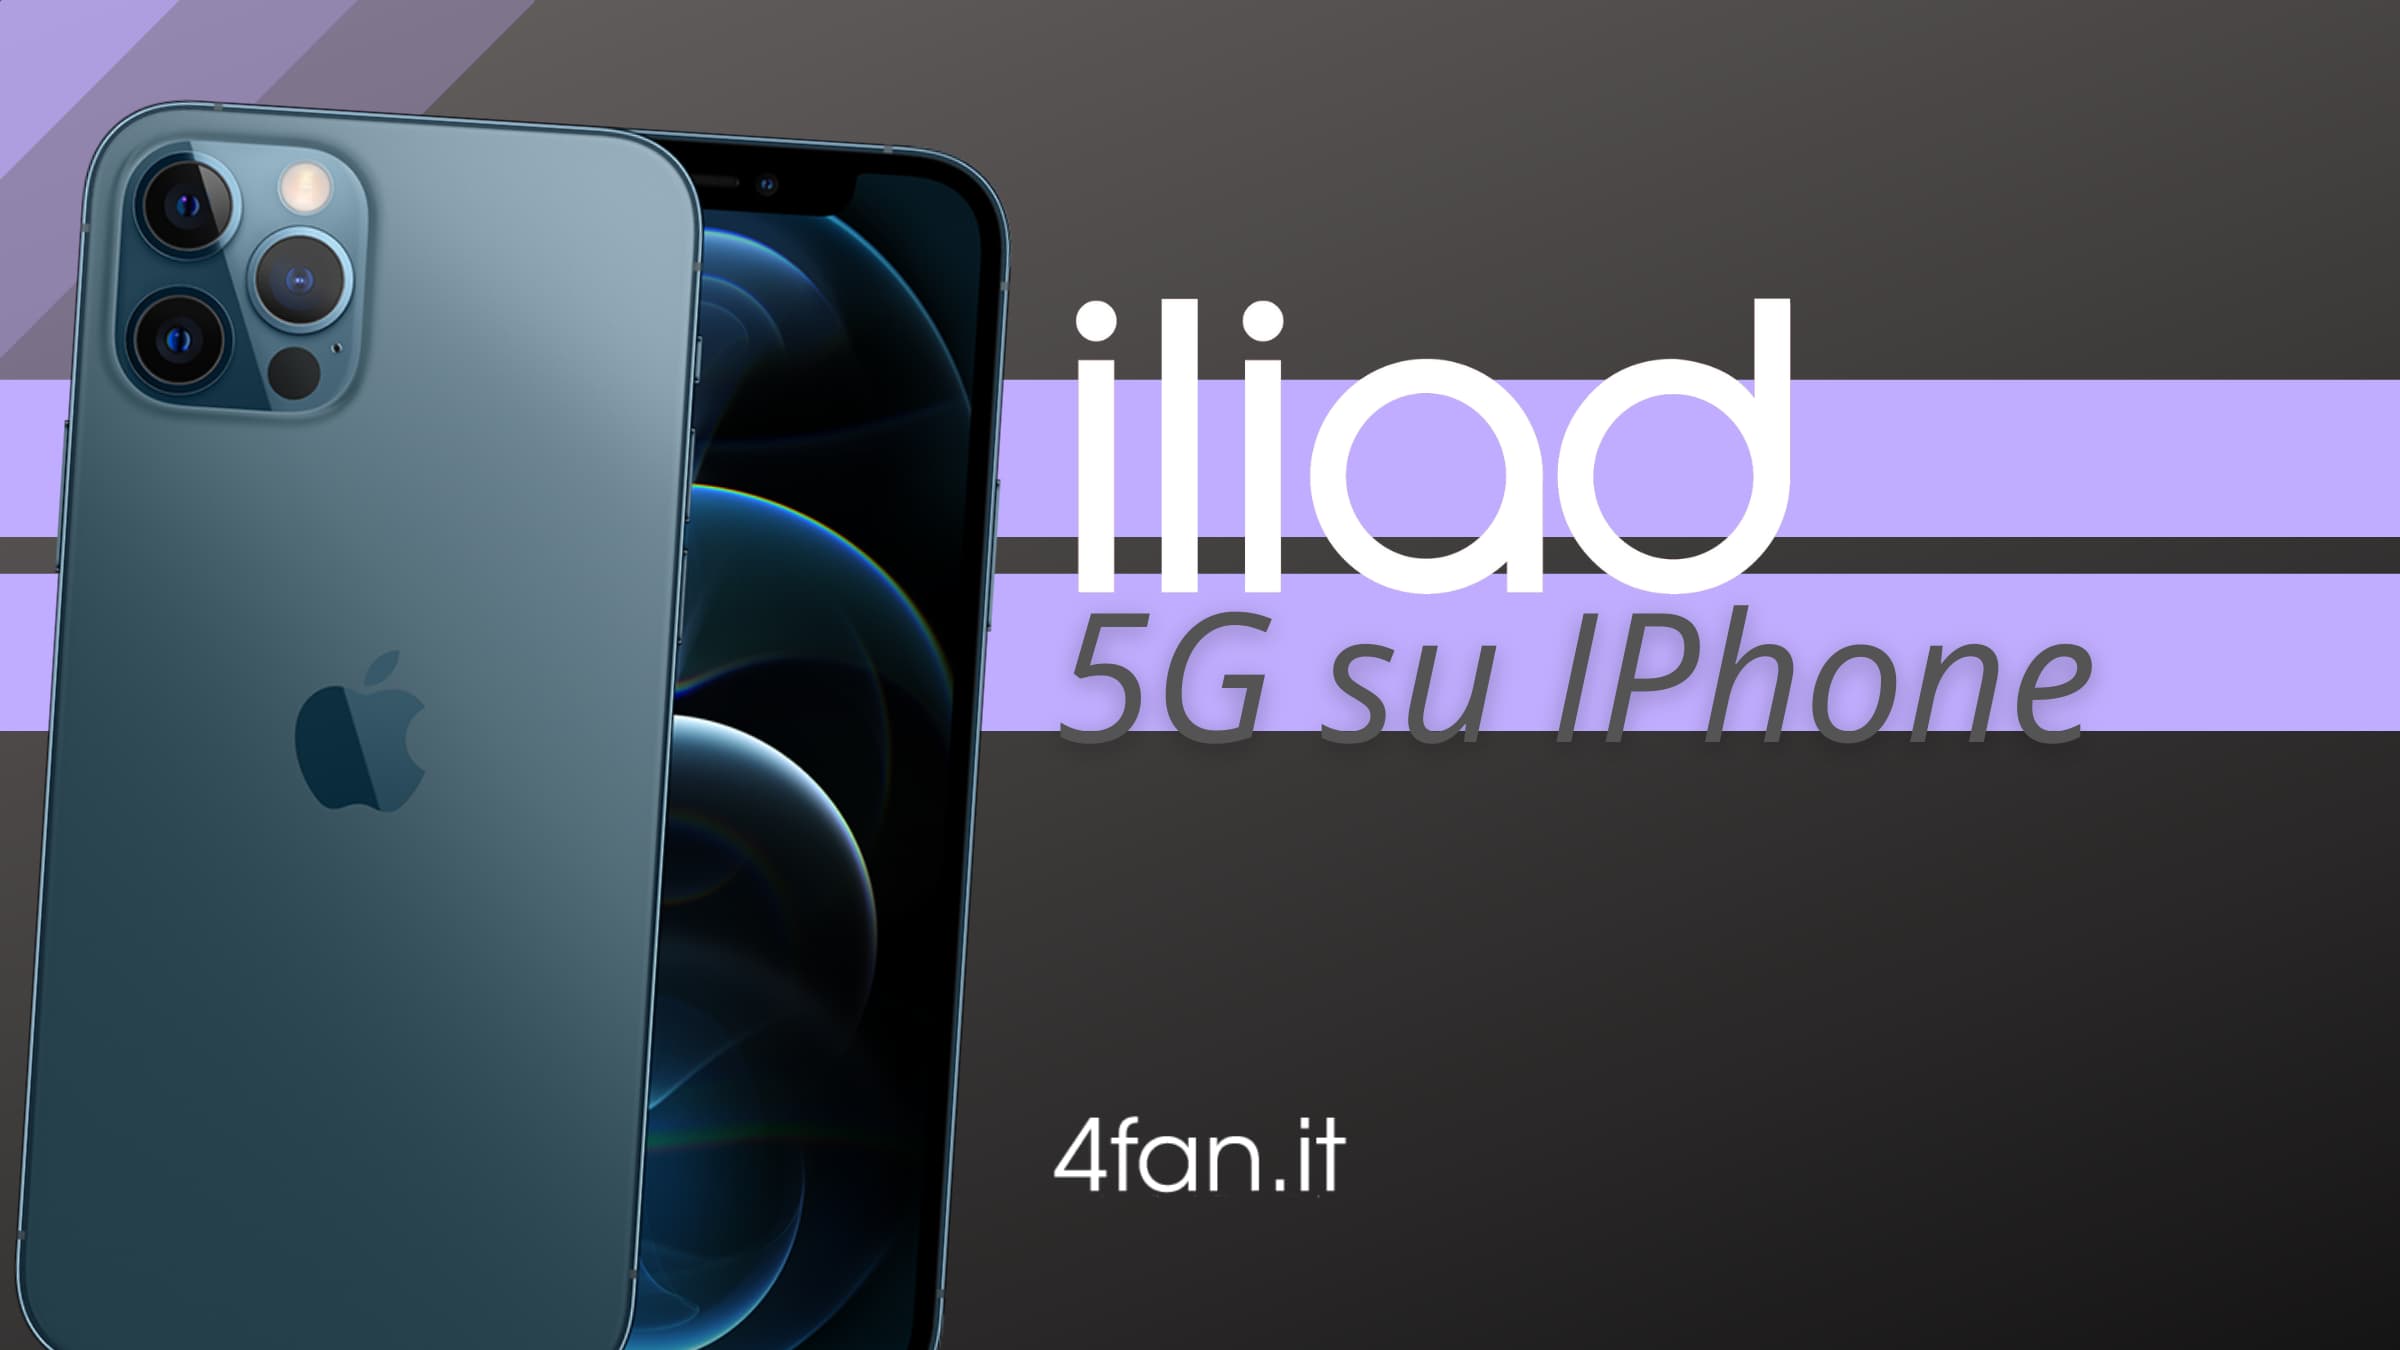 IPhone 12 5G Iliad